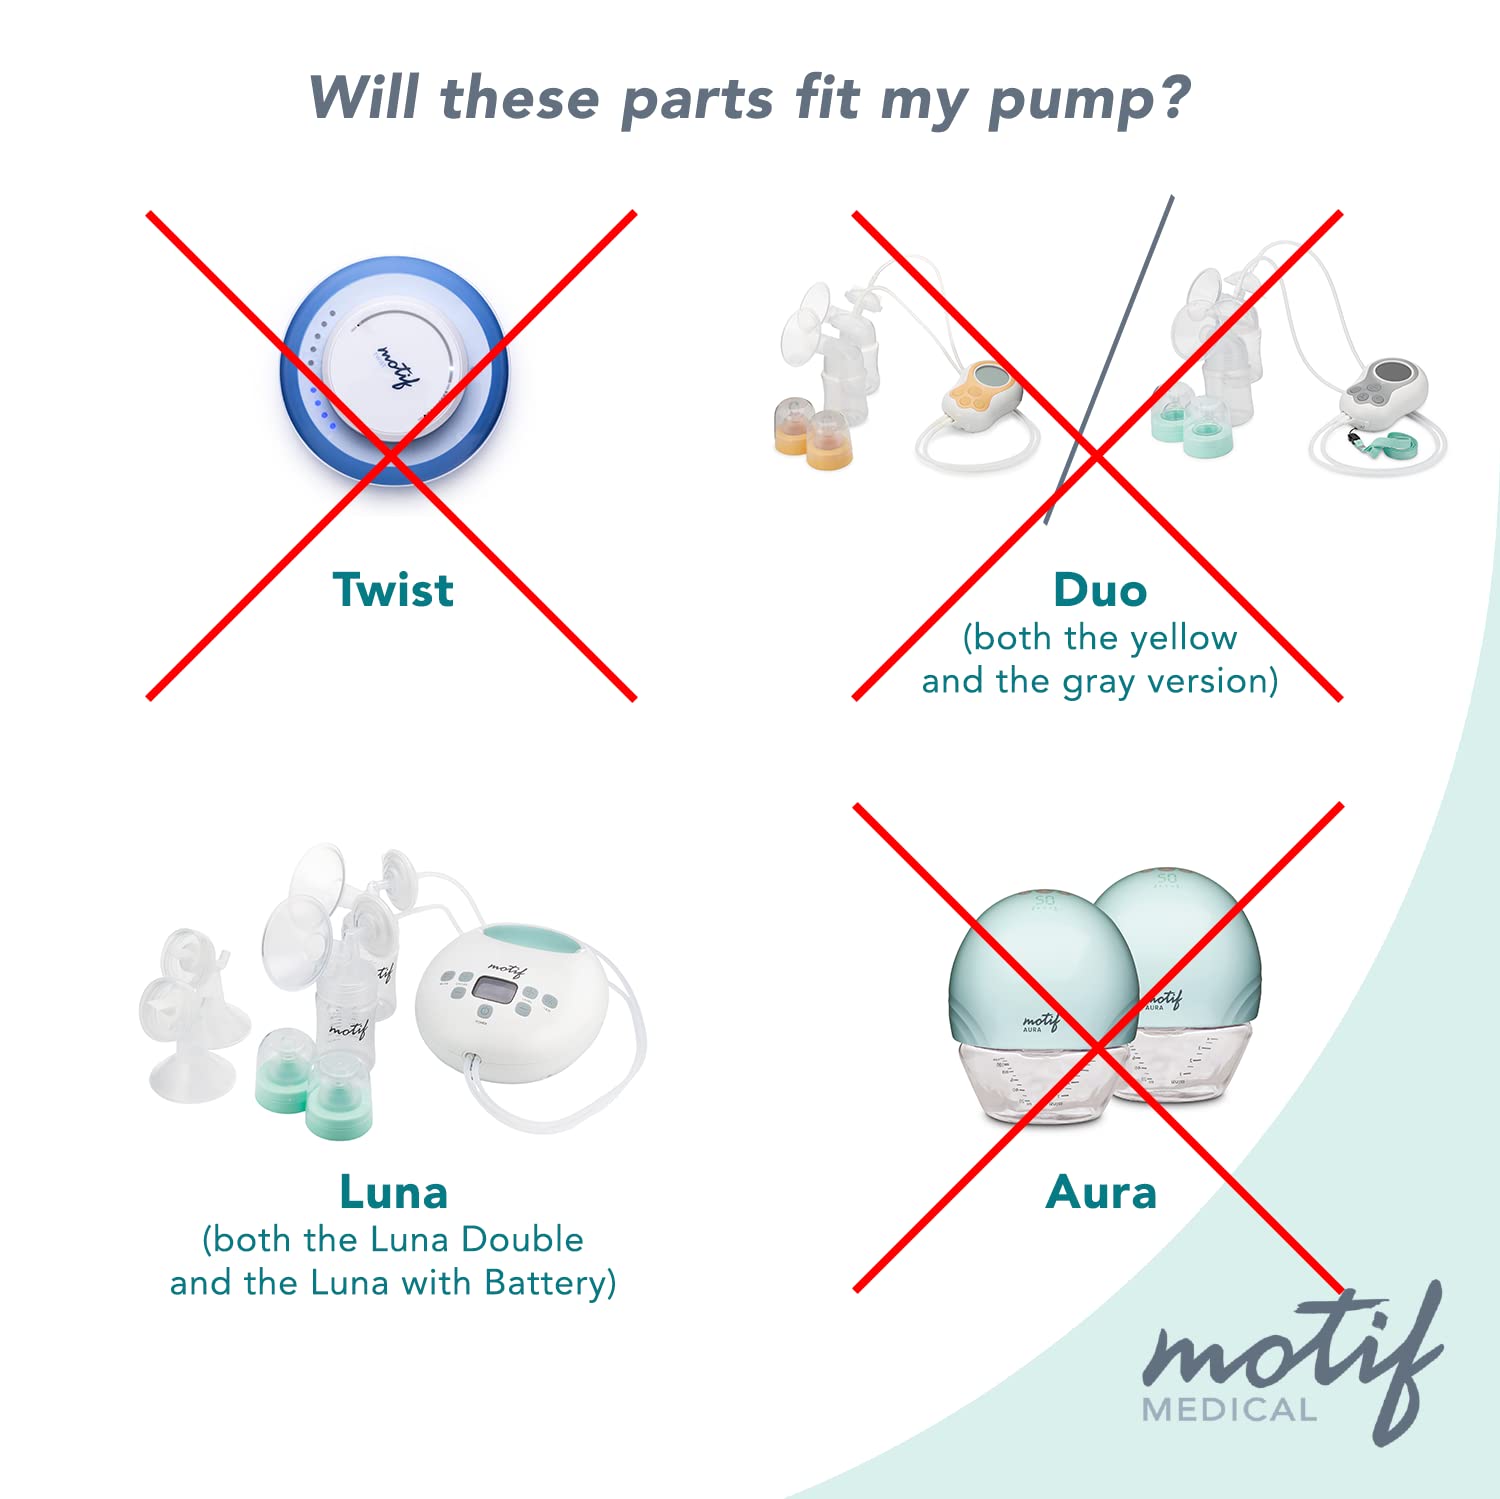 Motif Medical, Luna Valves, Replacement Parts for Luna Breast Pump - Set of 2